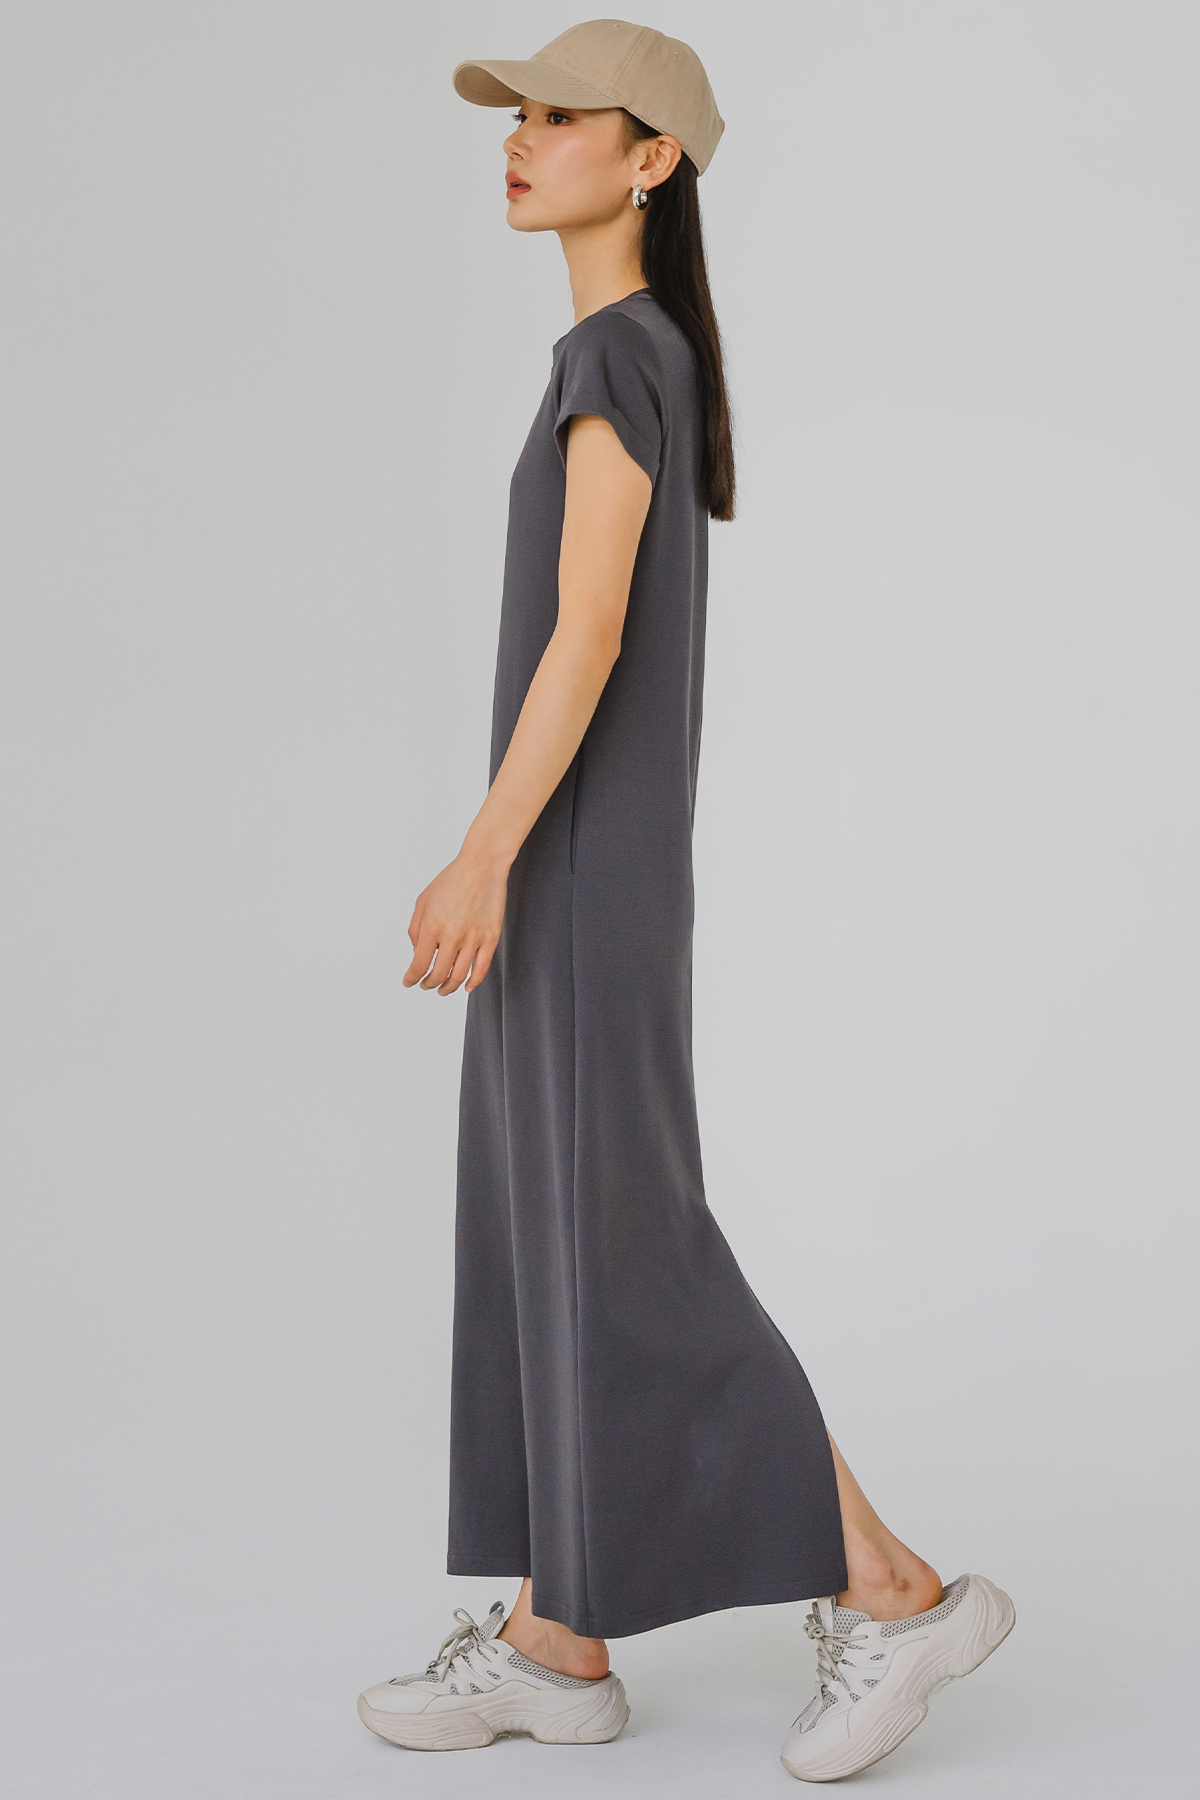 Backorder* For Keeps Round Neck Midaxi Dress (Dark Grey)